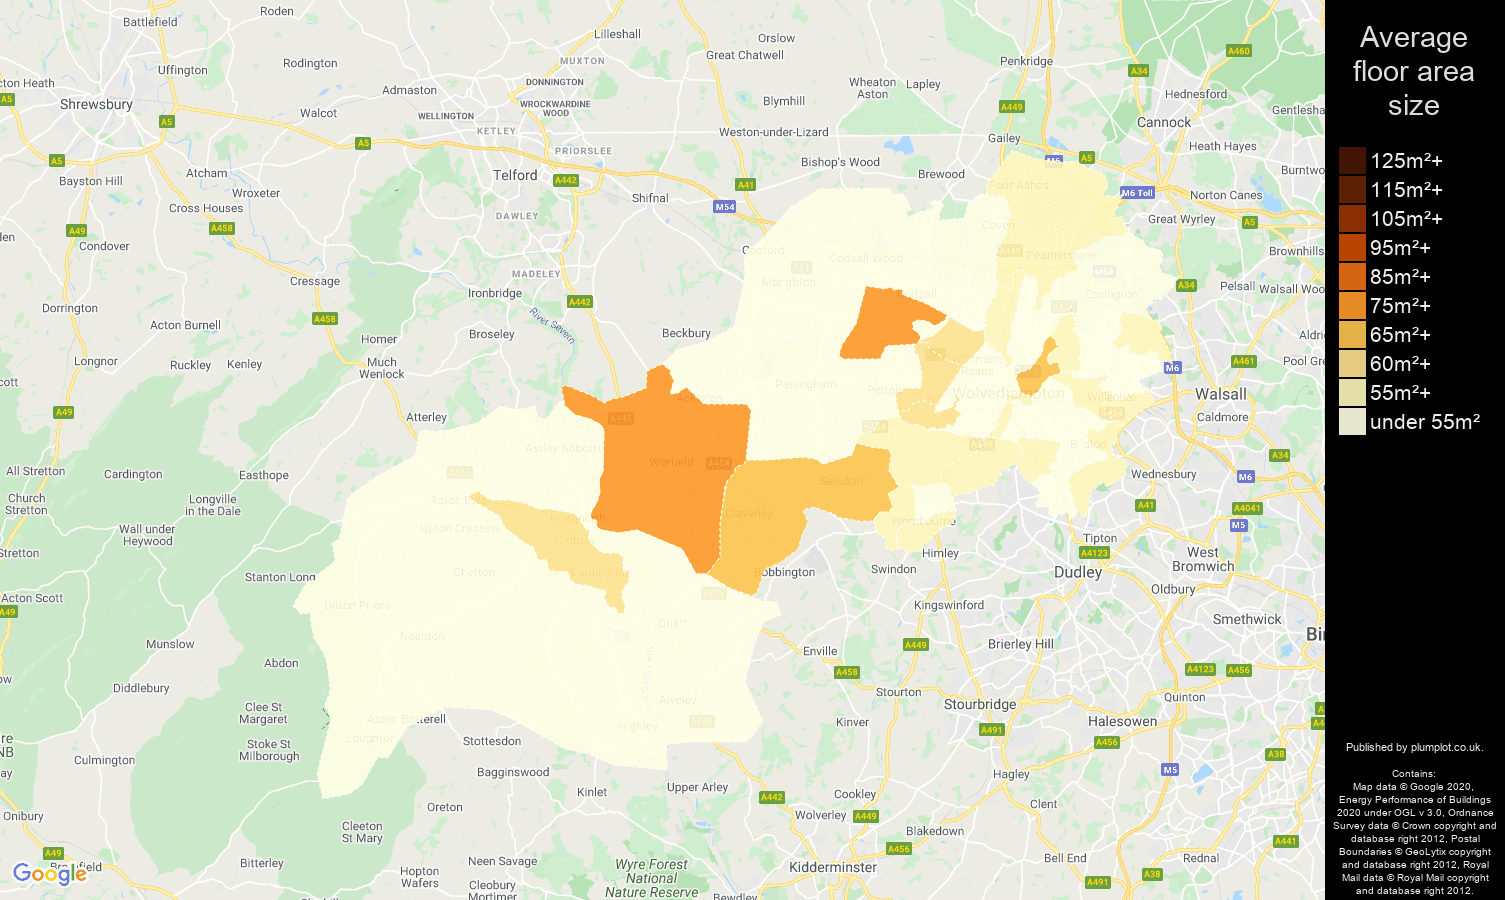 Wolverhampton map of average floor area size of flats